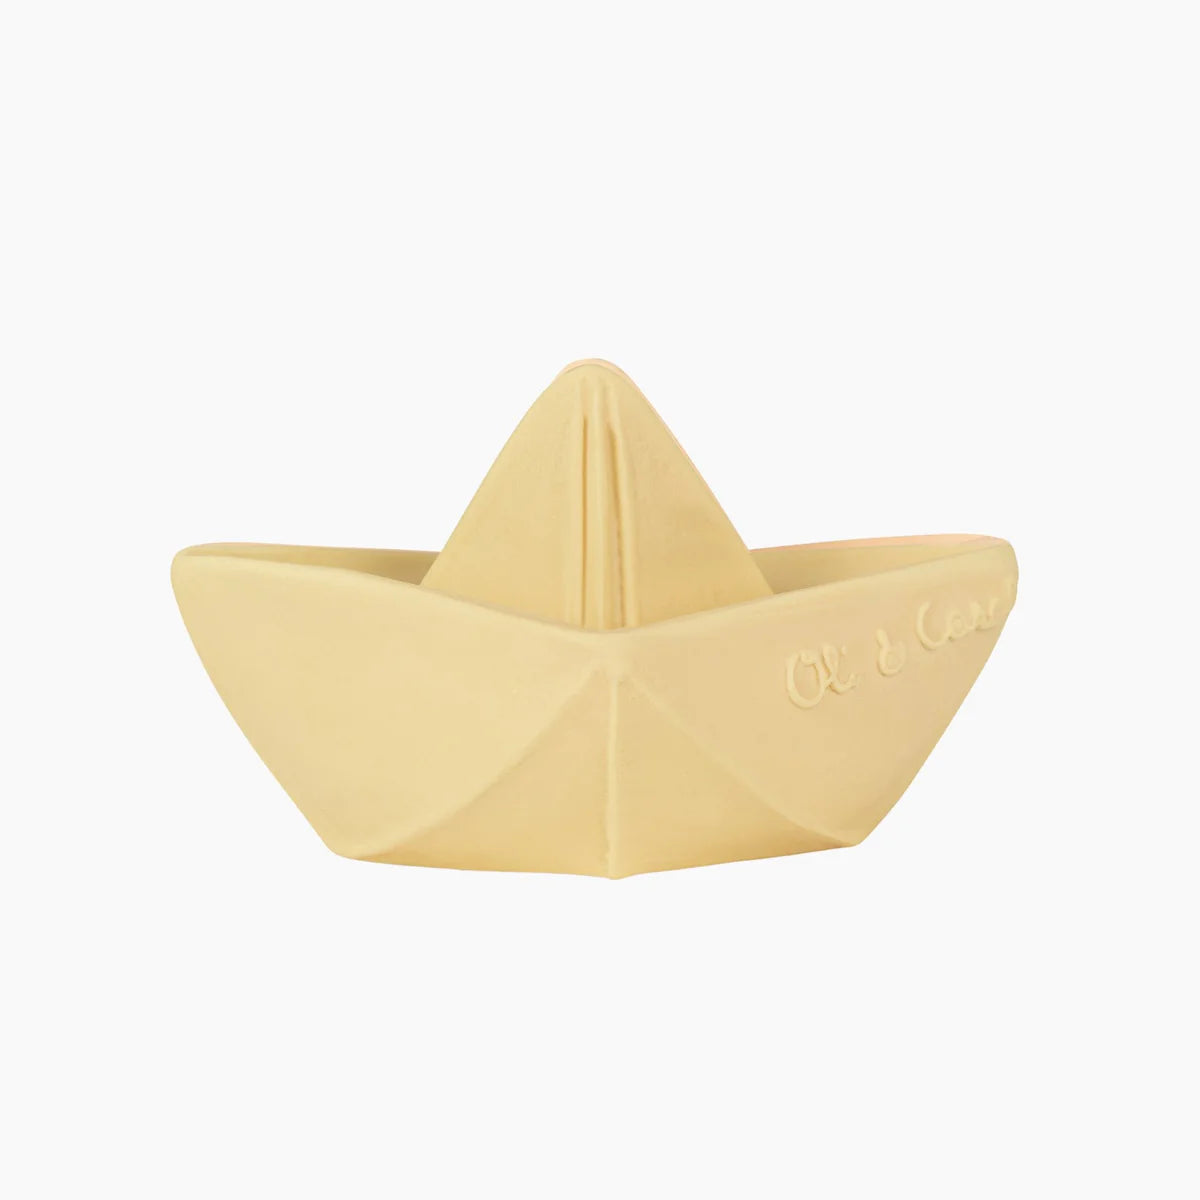 Origami Boat Bath Toy - Vanilla